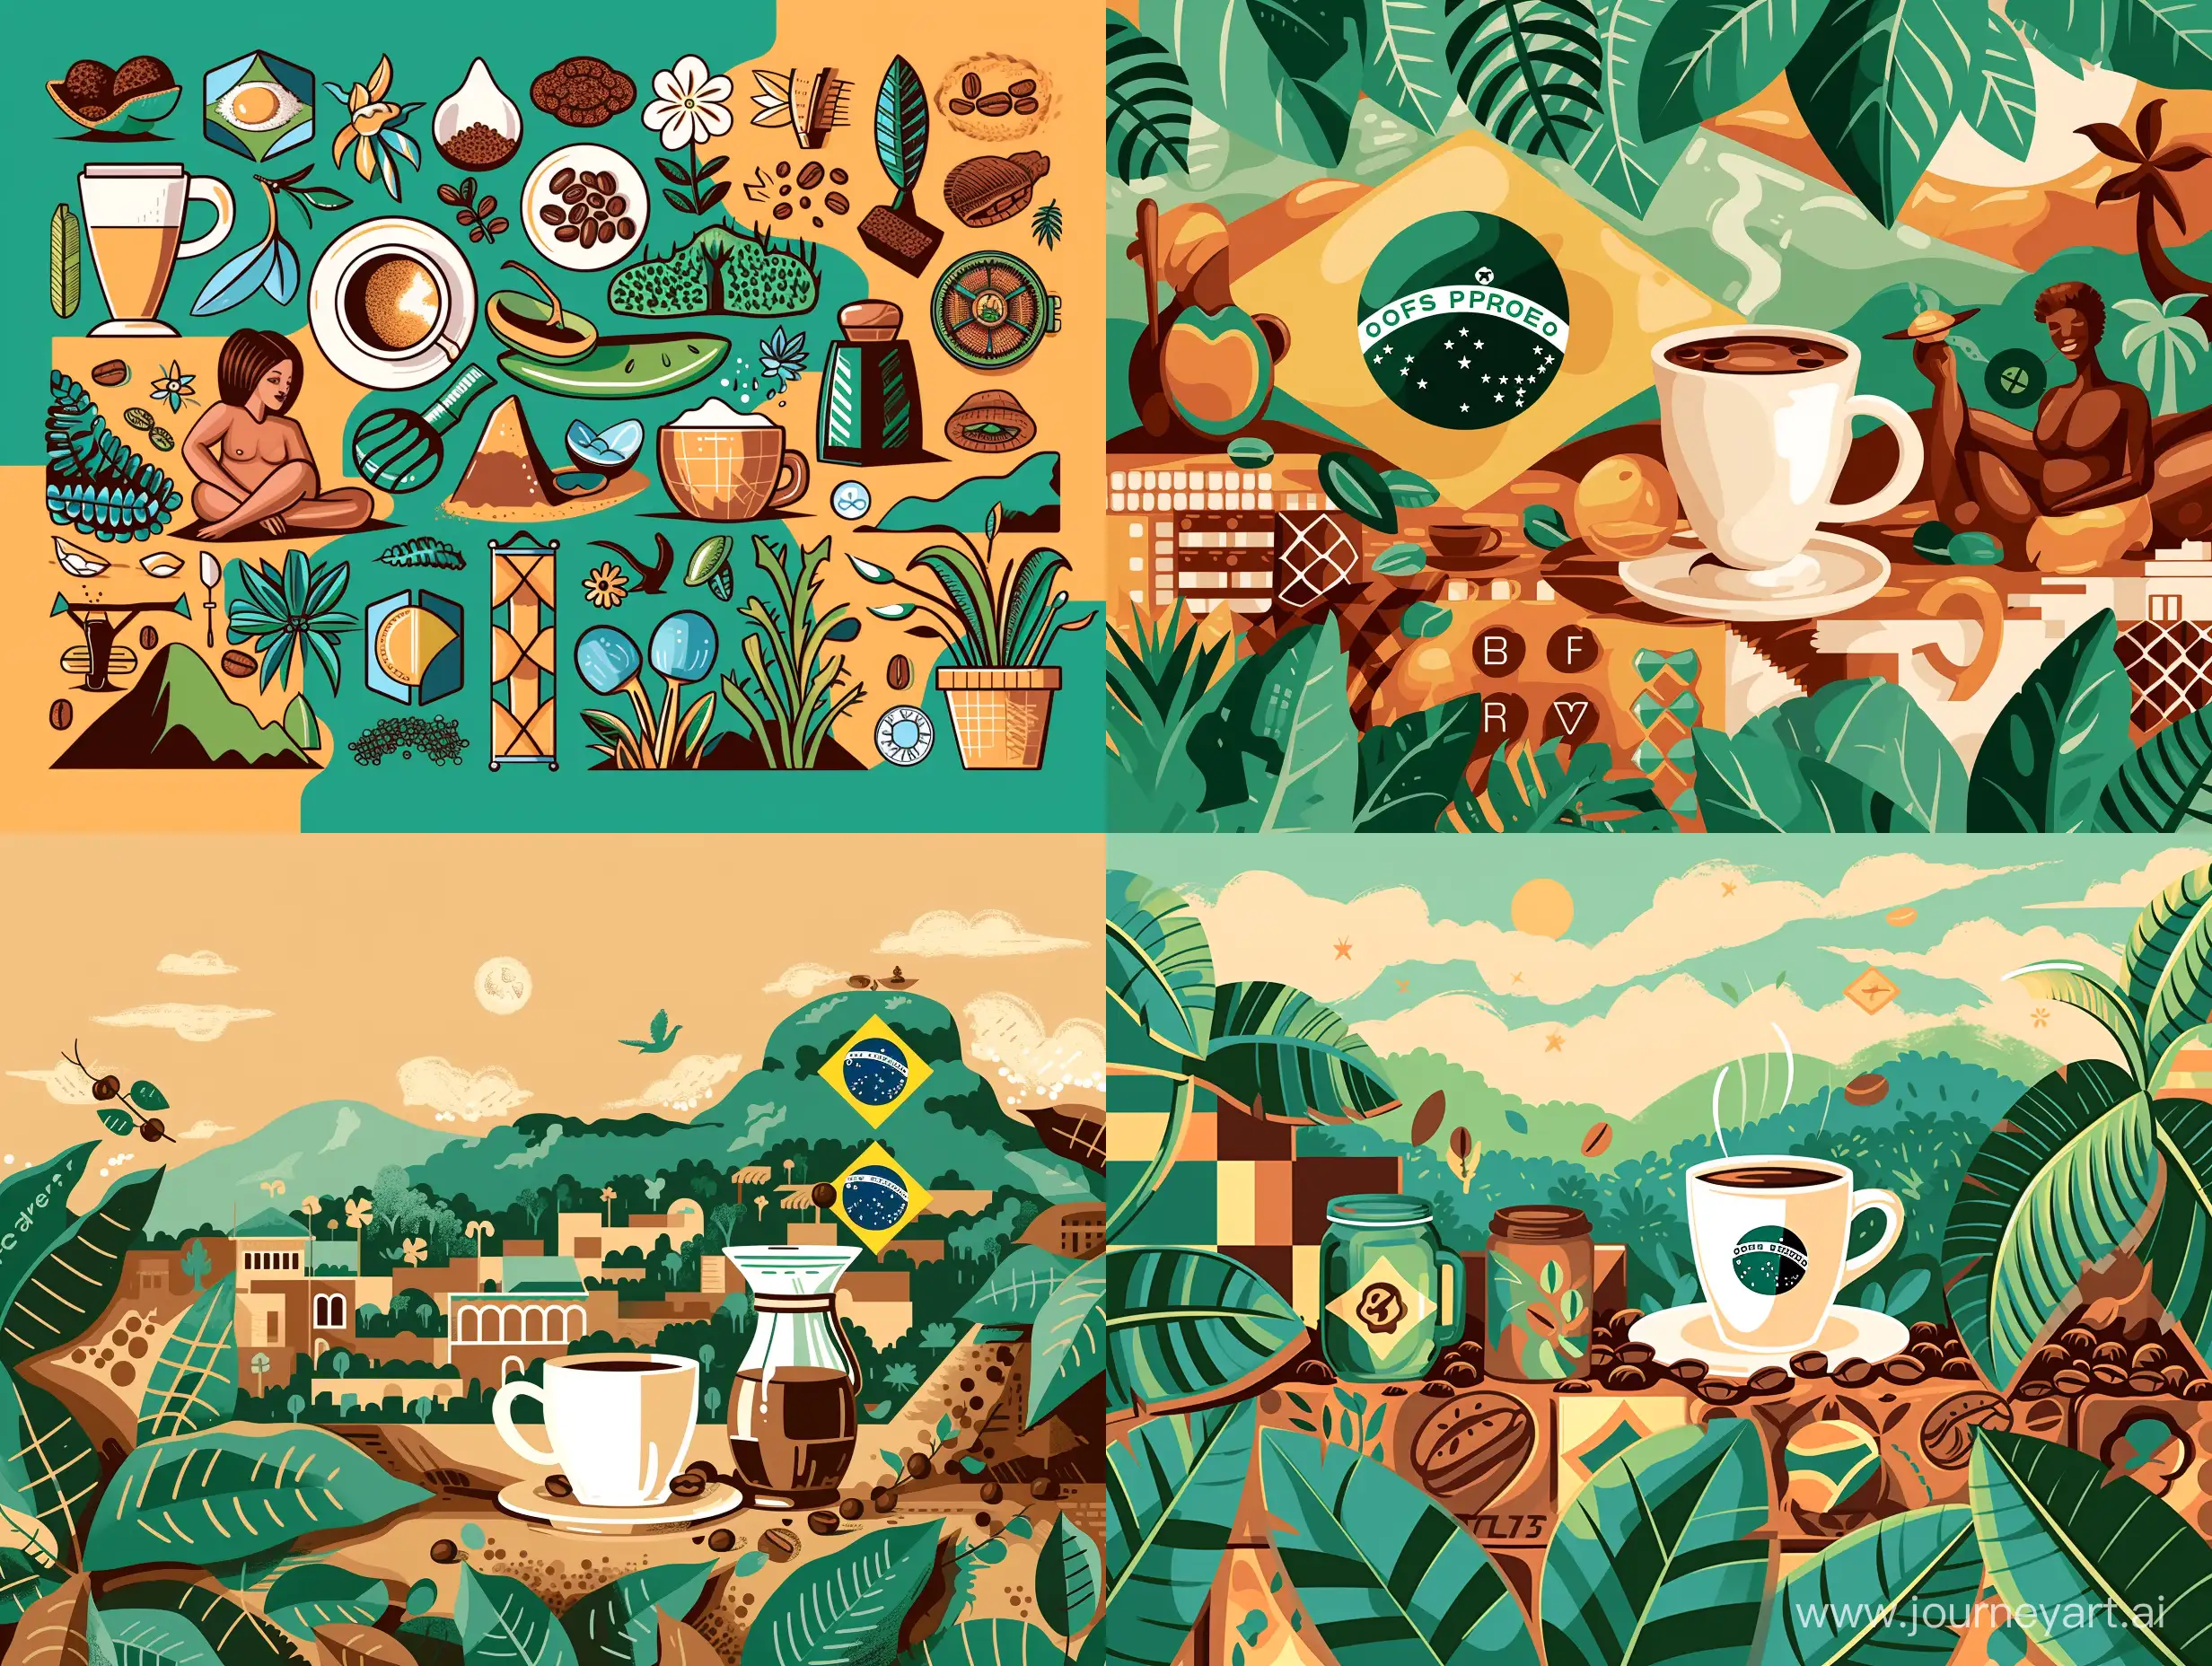 Иллюстрация кофе и символы Бразилии - sref https://mir-s3-cdn-cf.behance.net/project_modules/max_1200/fb85c778855831.5cb0c1615d660.jpg